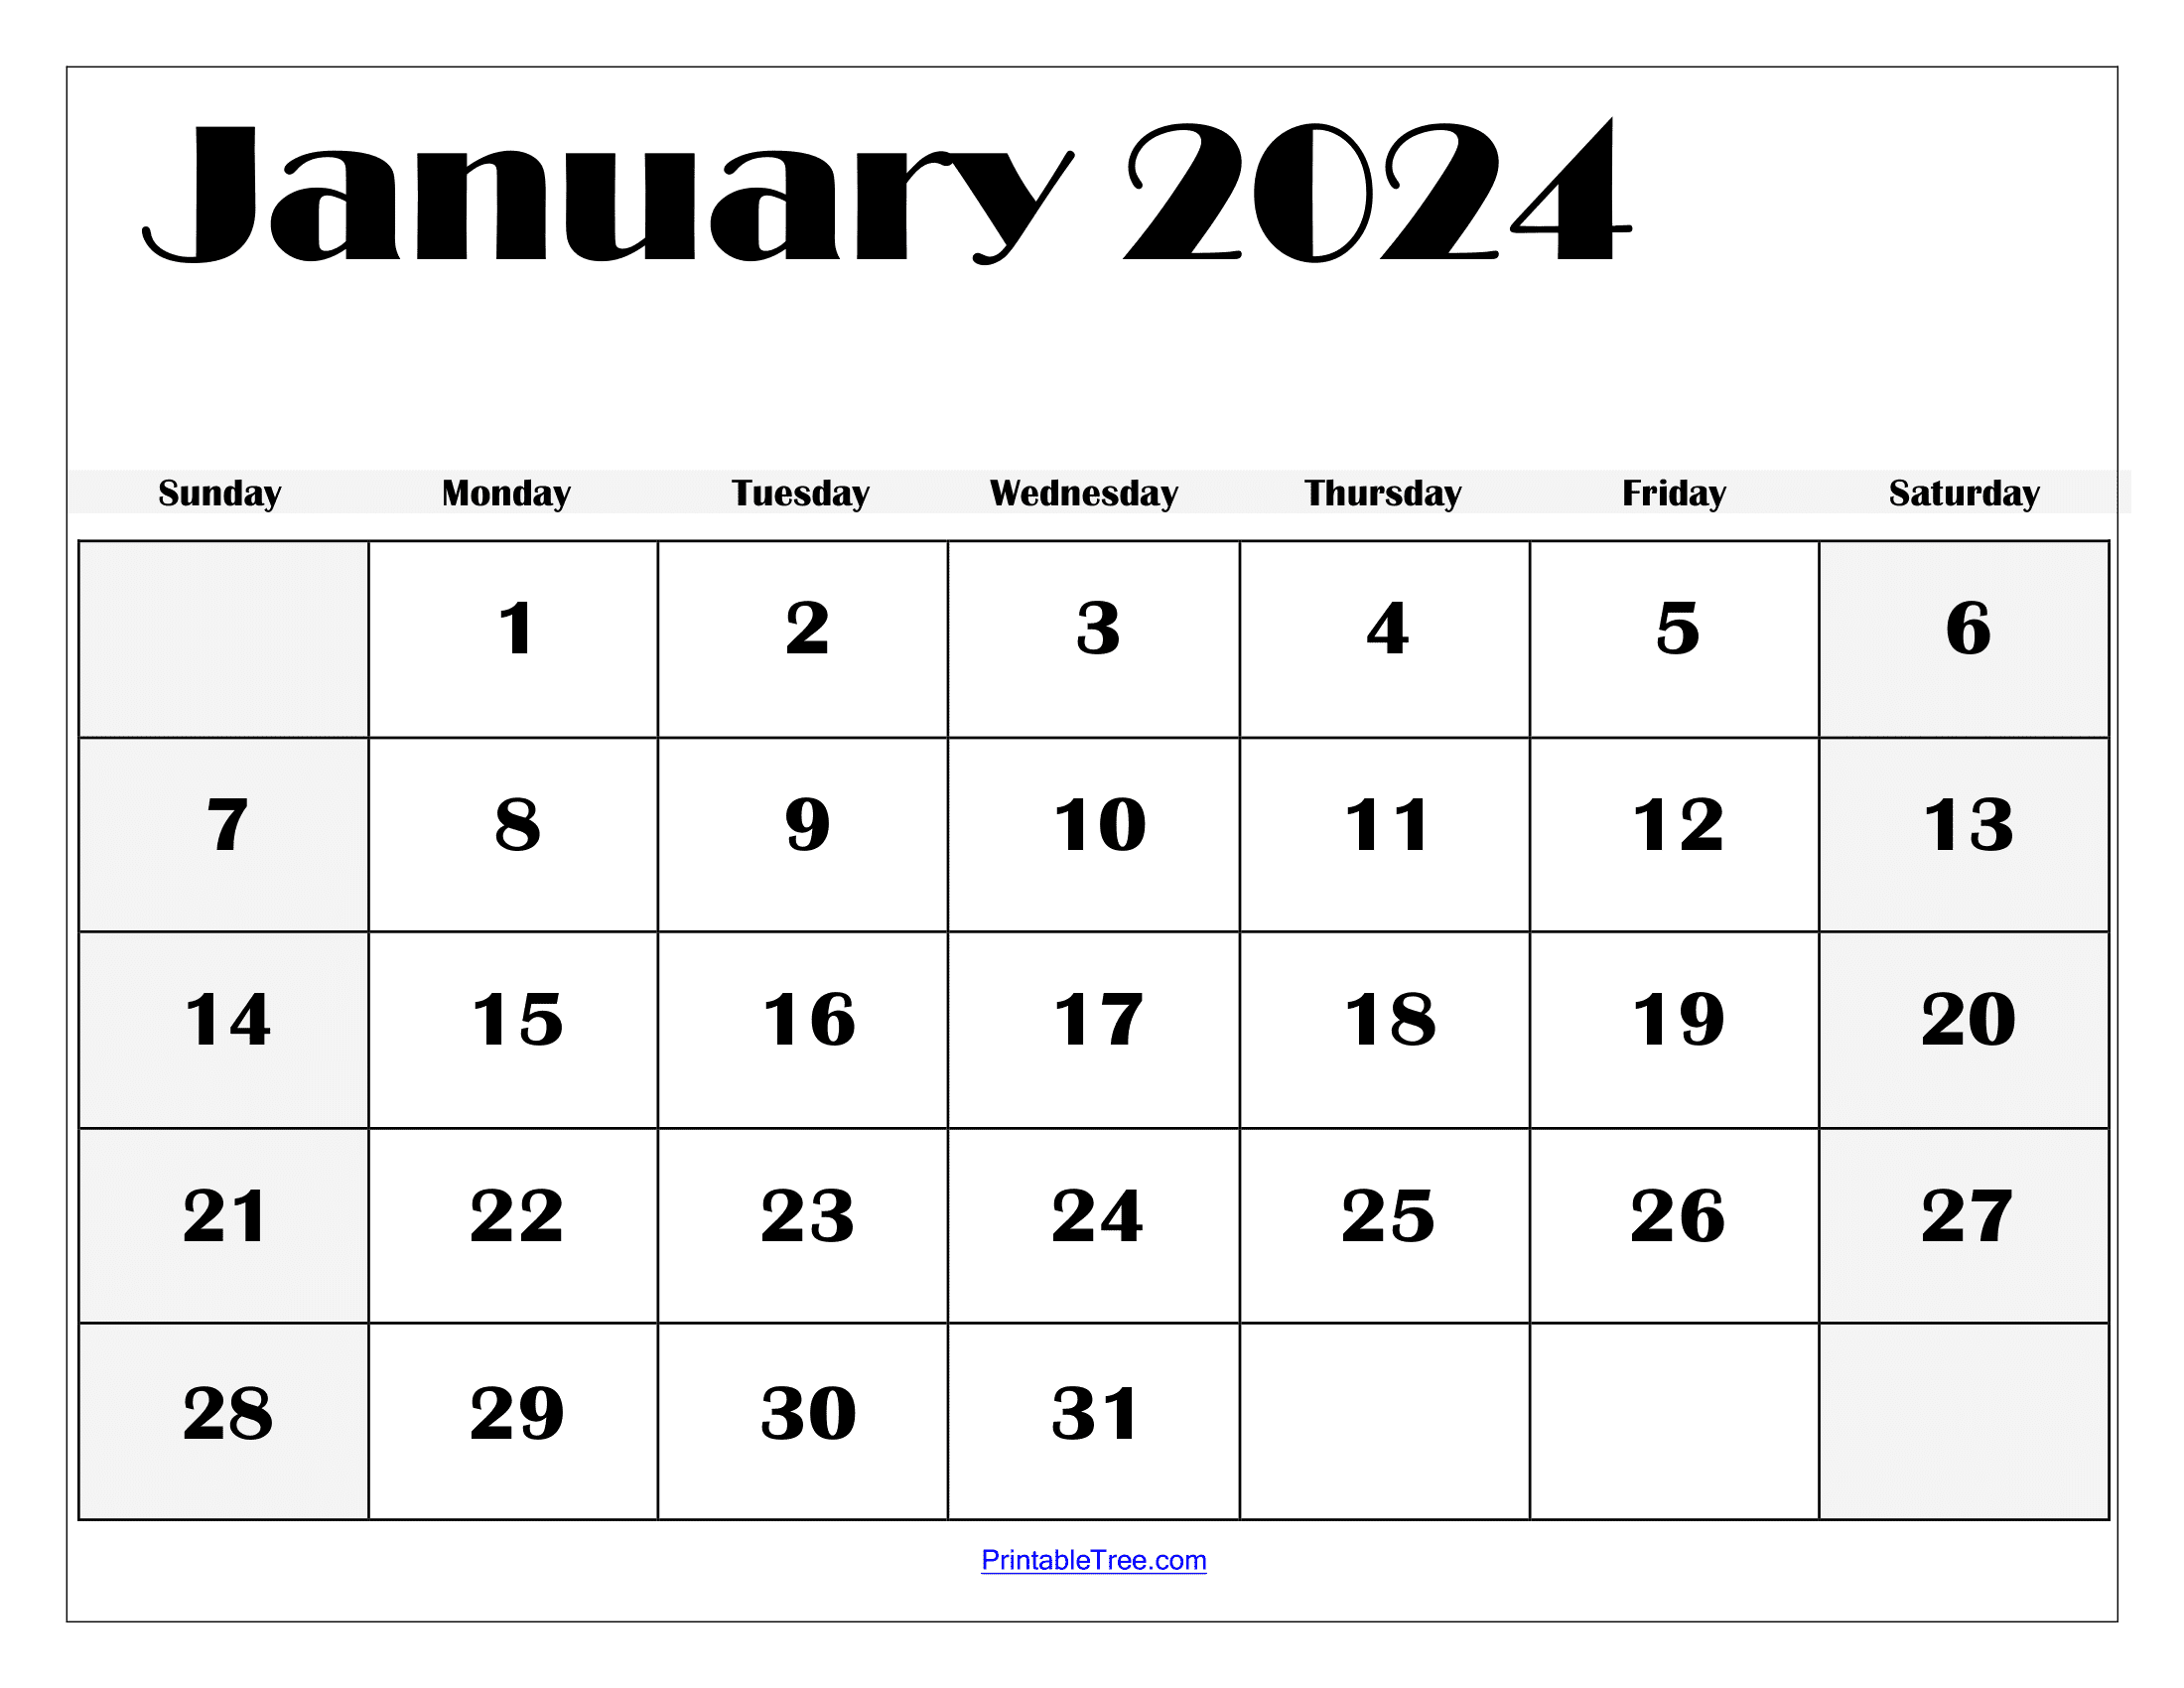 January 2024 Calendar Printable Pdf Template With Holidays for January And February 2024 Calendar Free Printable